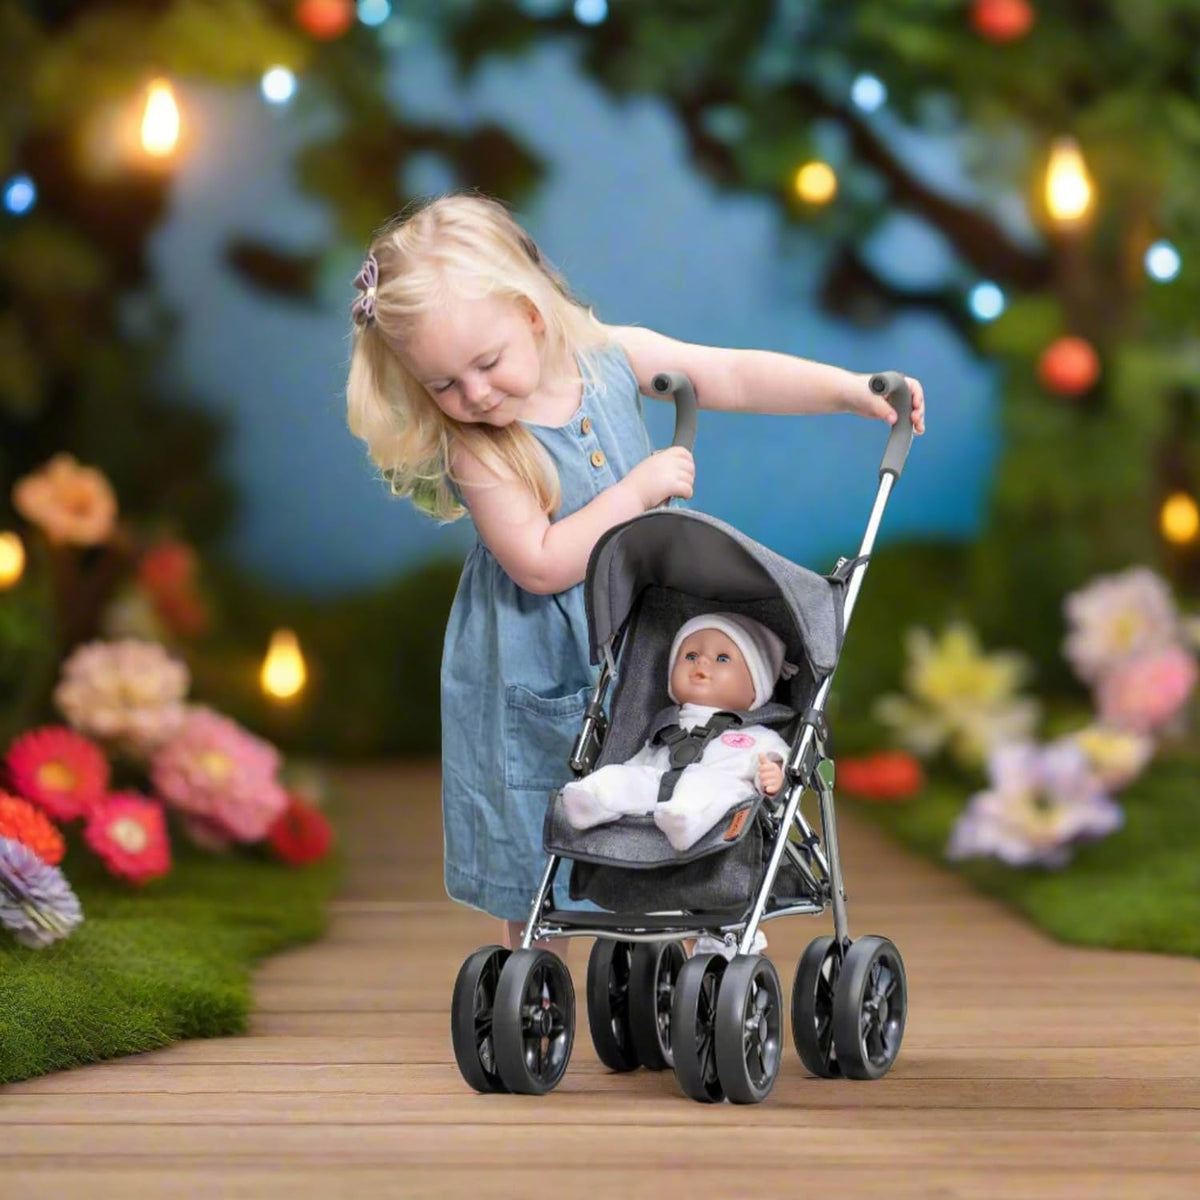 Celuna Premium Junior Dolls Stroller - lightweight and durable doll stroller with a sleek design, perfect for imaginative play